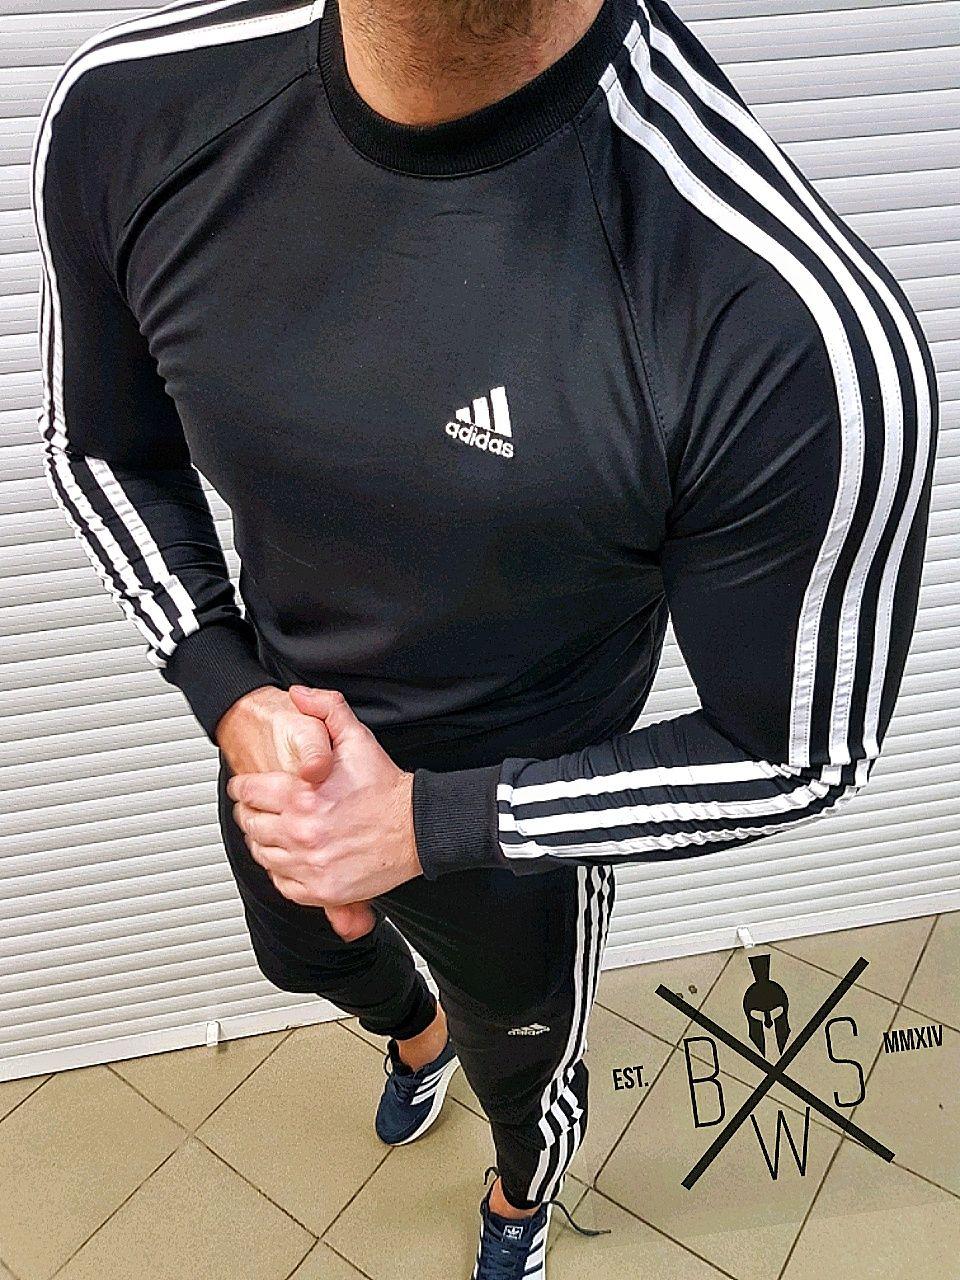 Свитшот мужской Adidas / кофта весенняя осенняя, цена 669 грн - Prom.ua  (ID#1111545900)